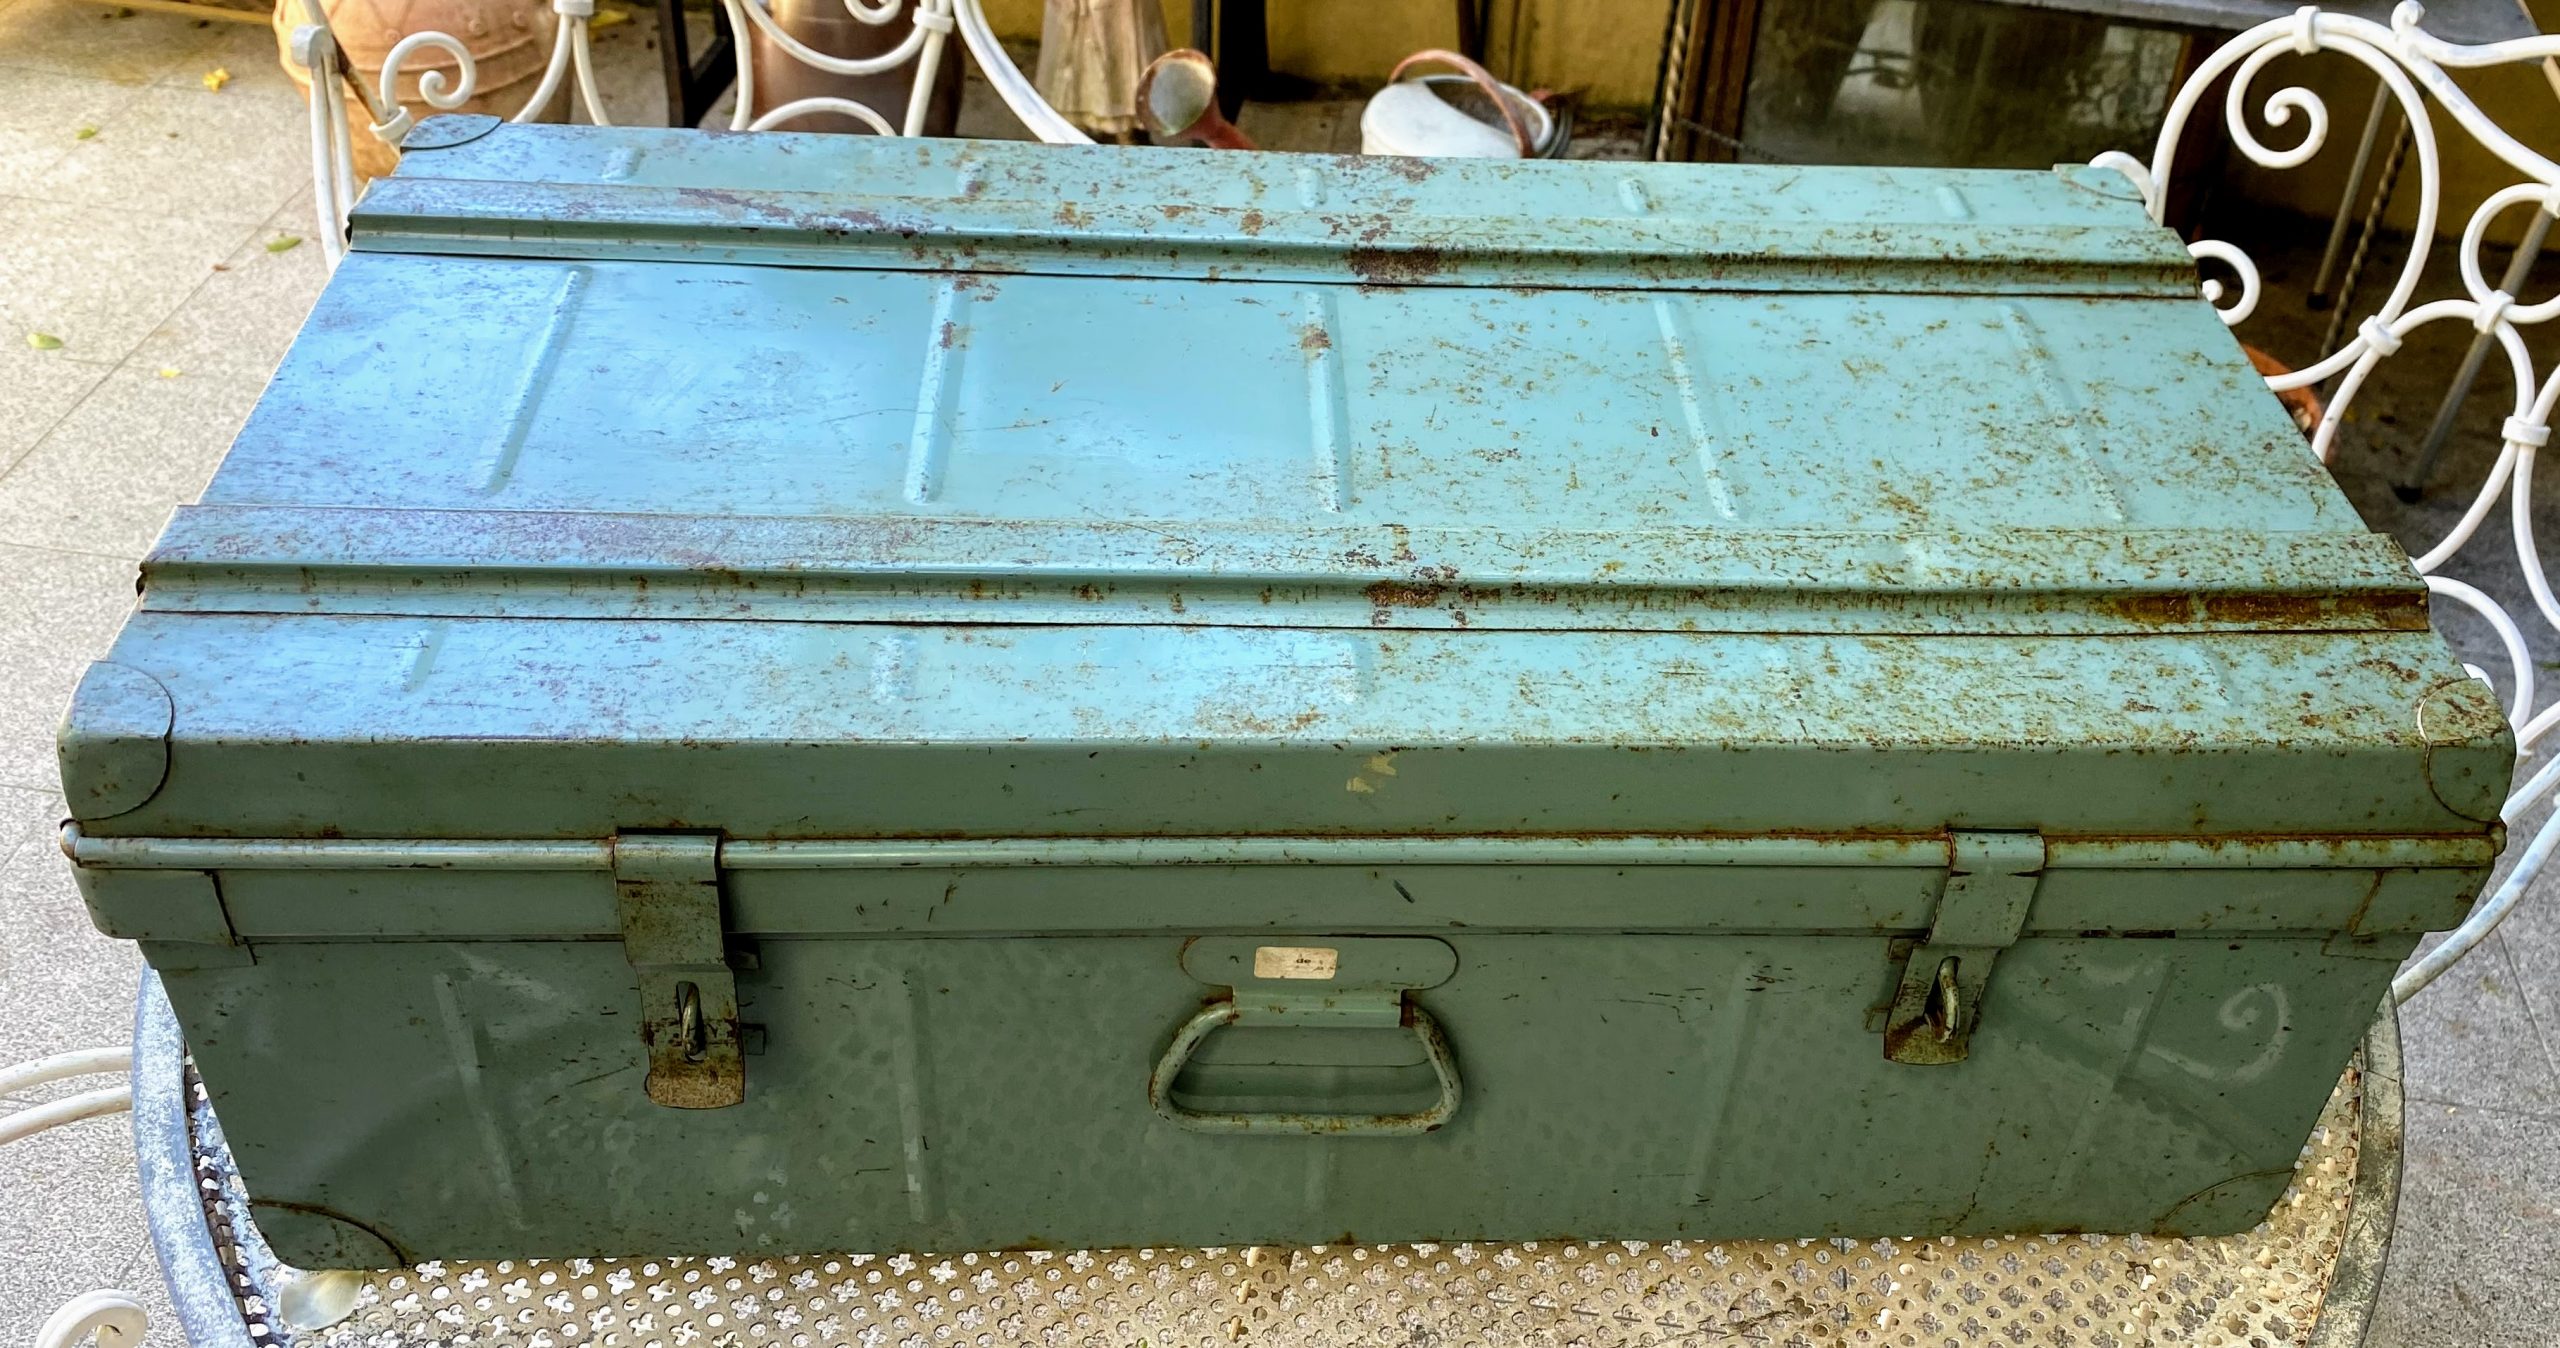 Trouw Ontslag Hol Vintage industriële metalen koffer turquoise blauw | Antiek en Curiosa